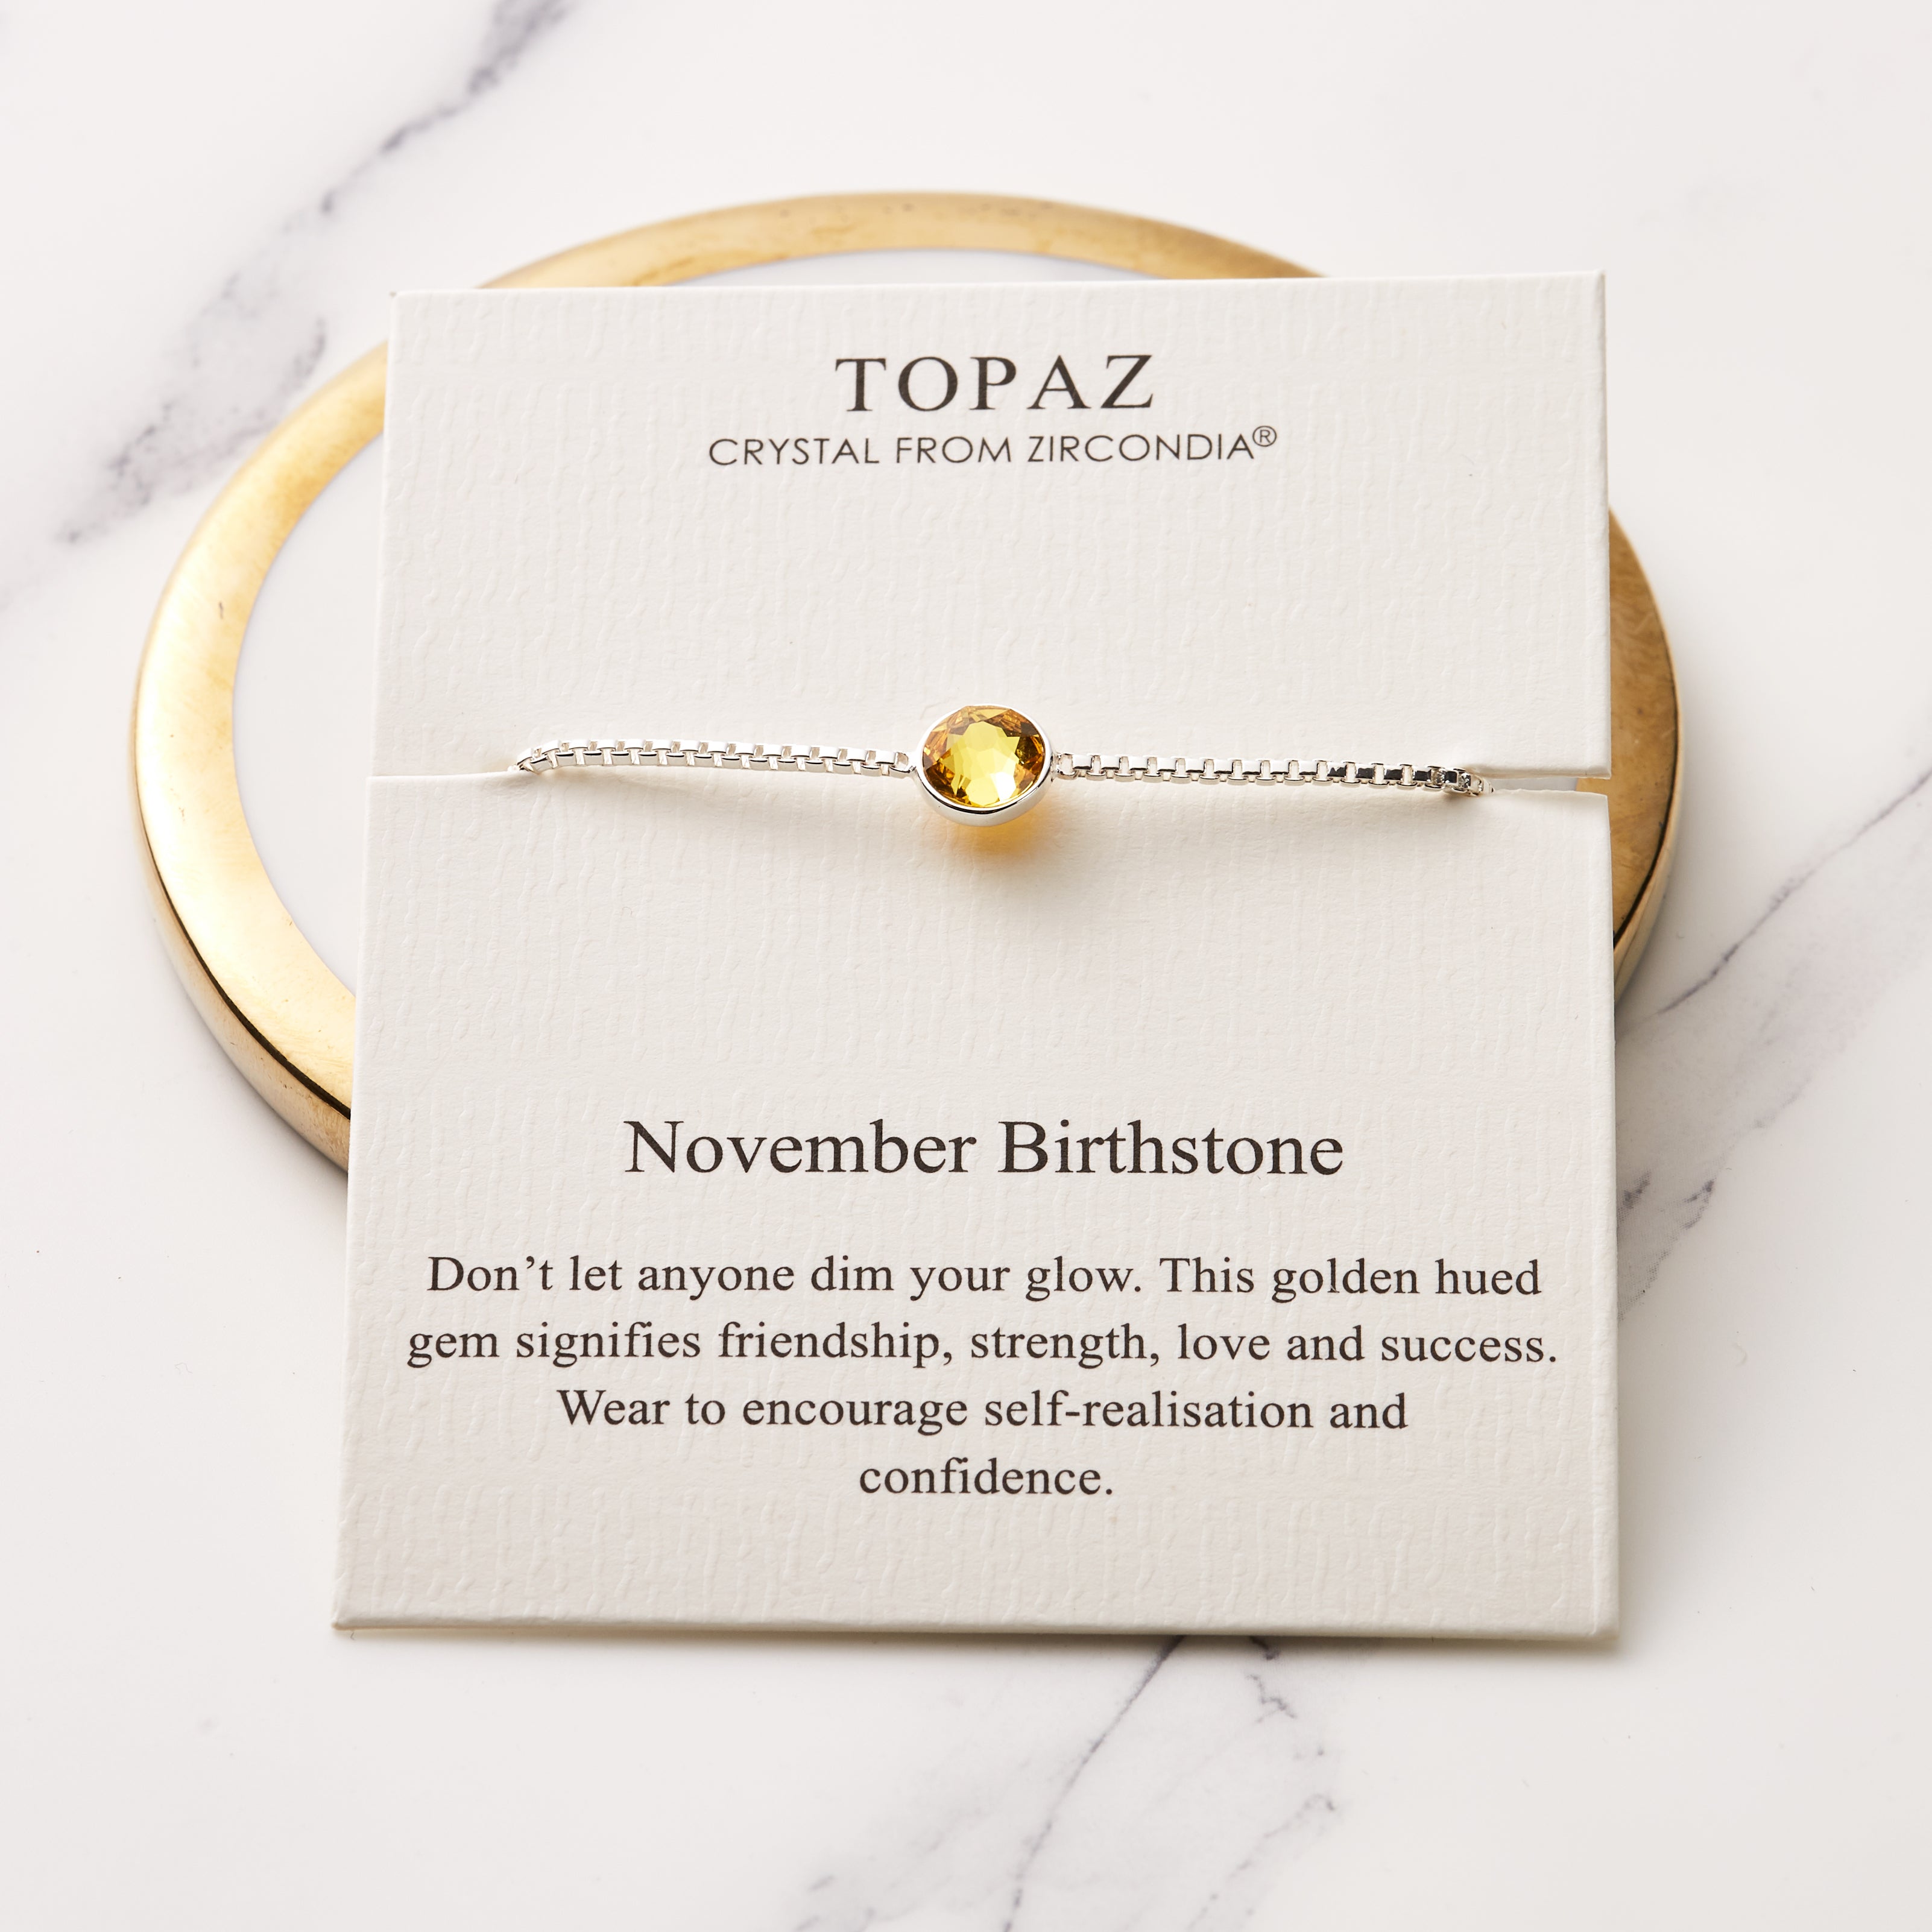 November (Topaz) Birthstone Bracelet Created with Zircondia® Crystals